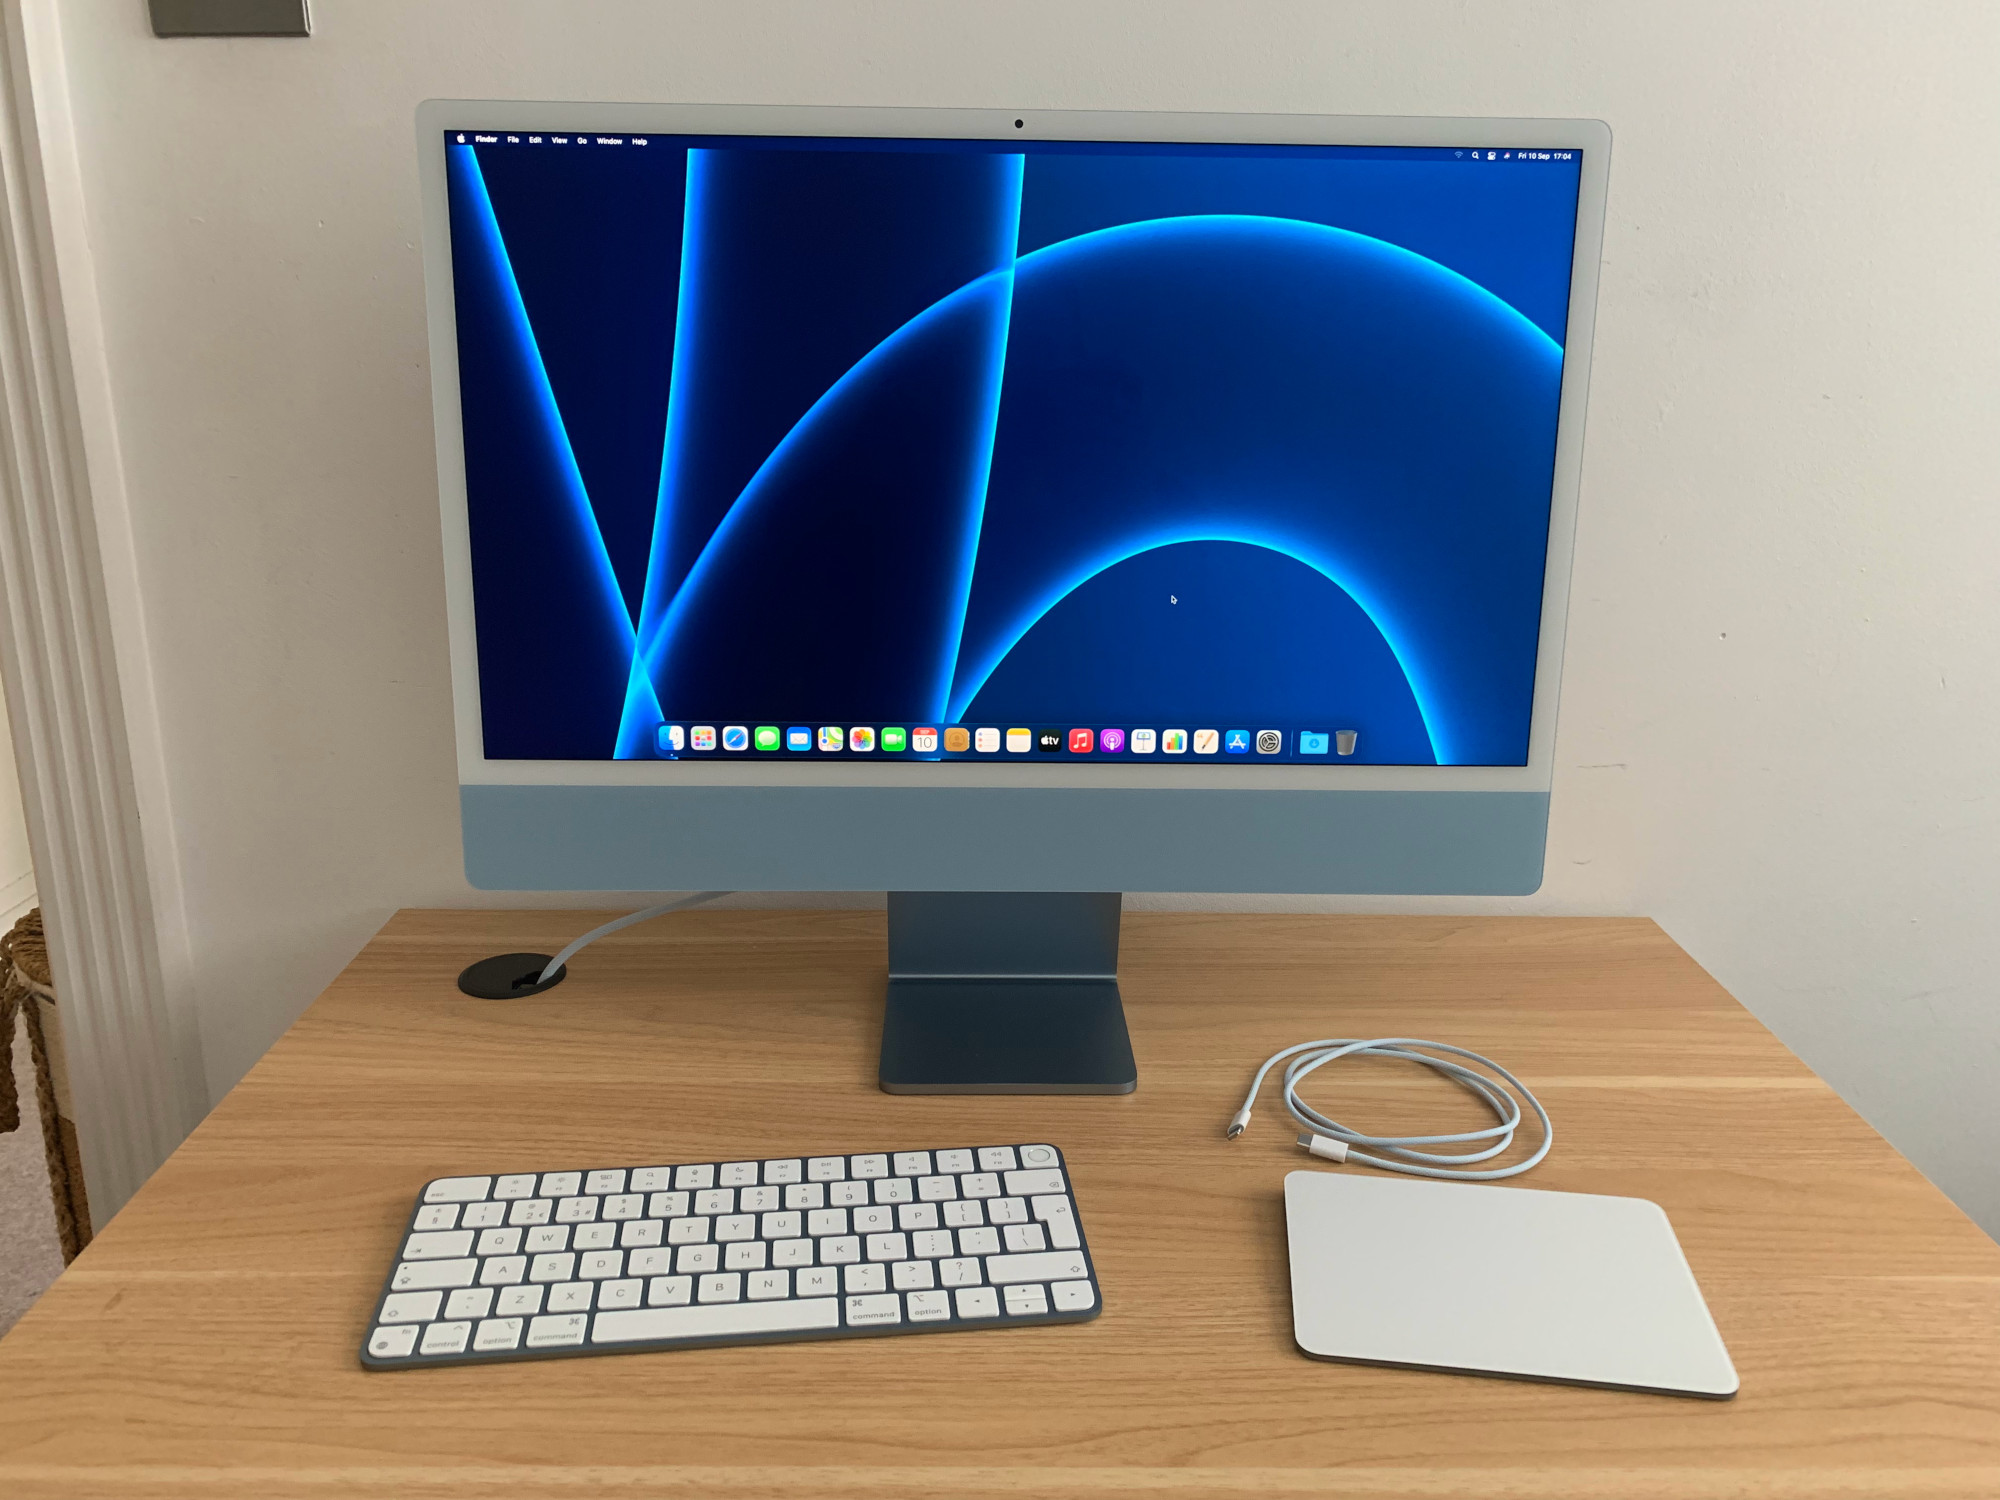 M1 iMac on the desk